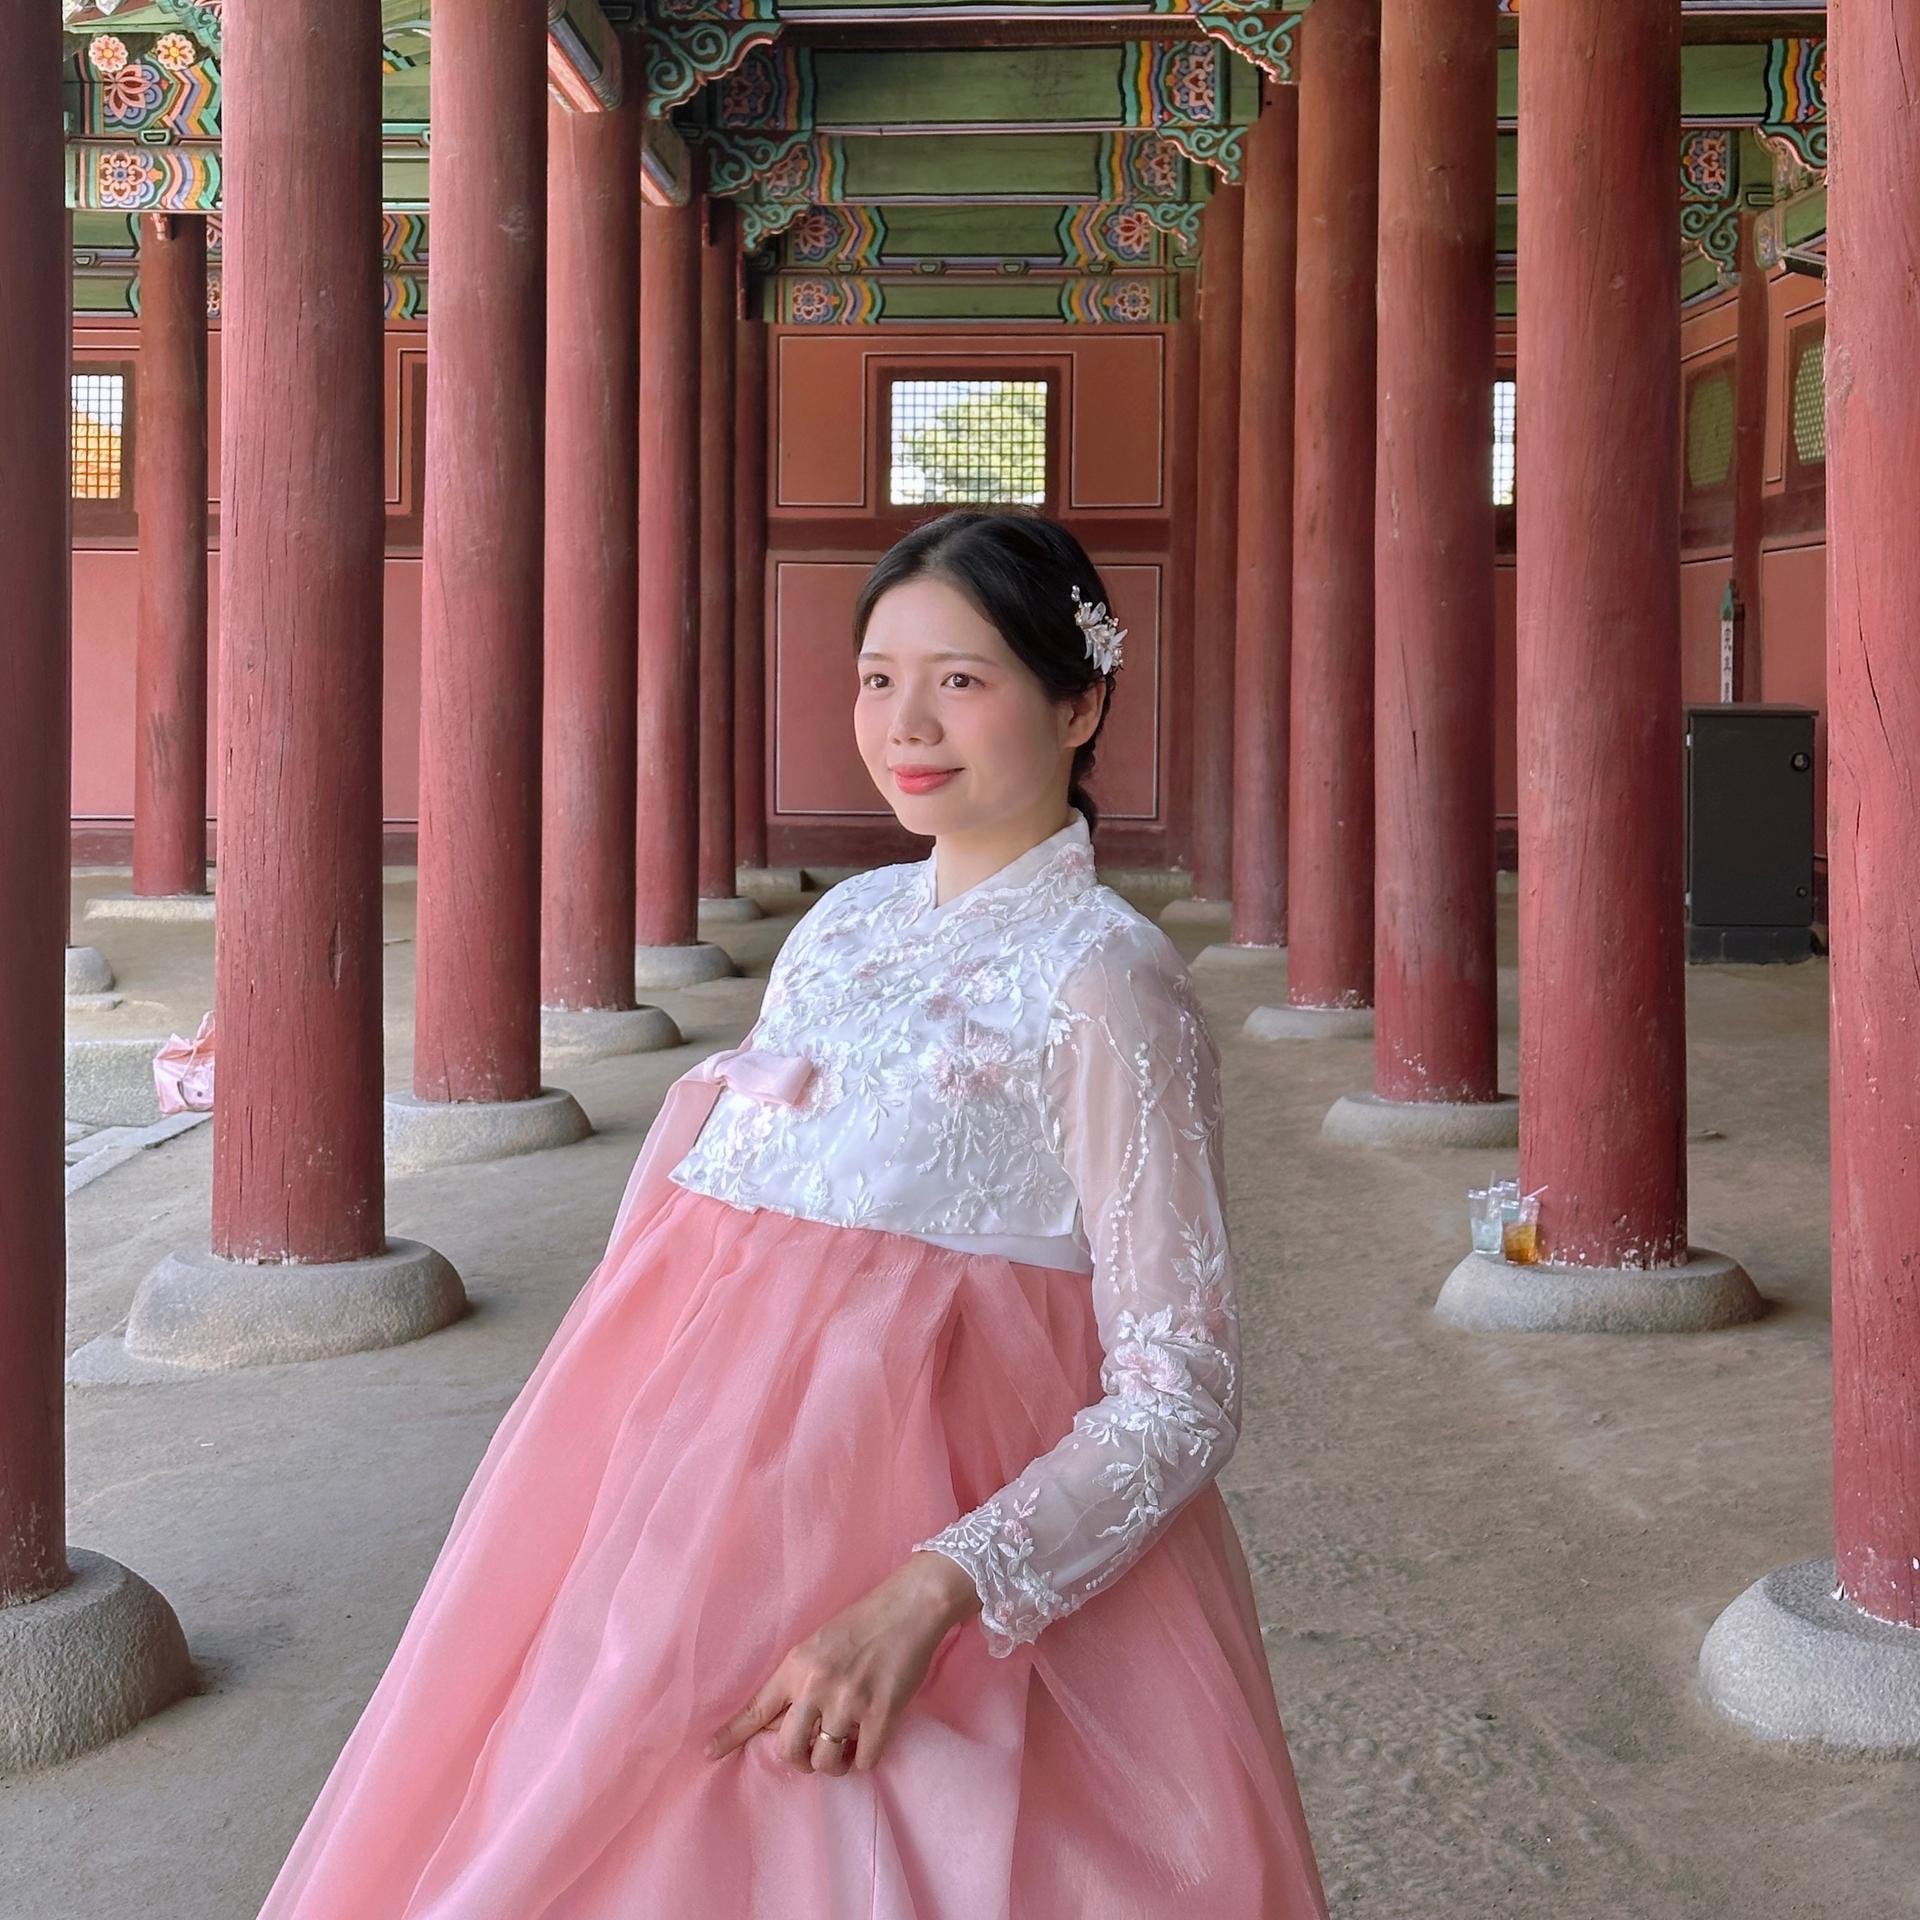 Hanbok Girls, Gyeongbokgung